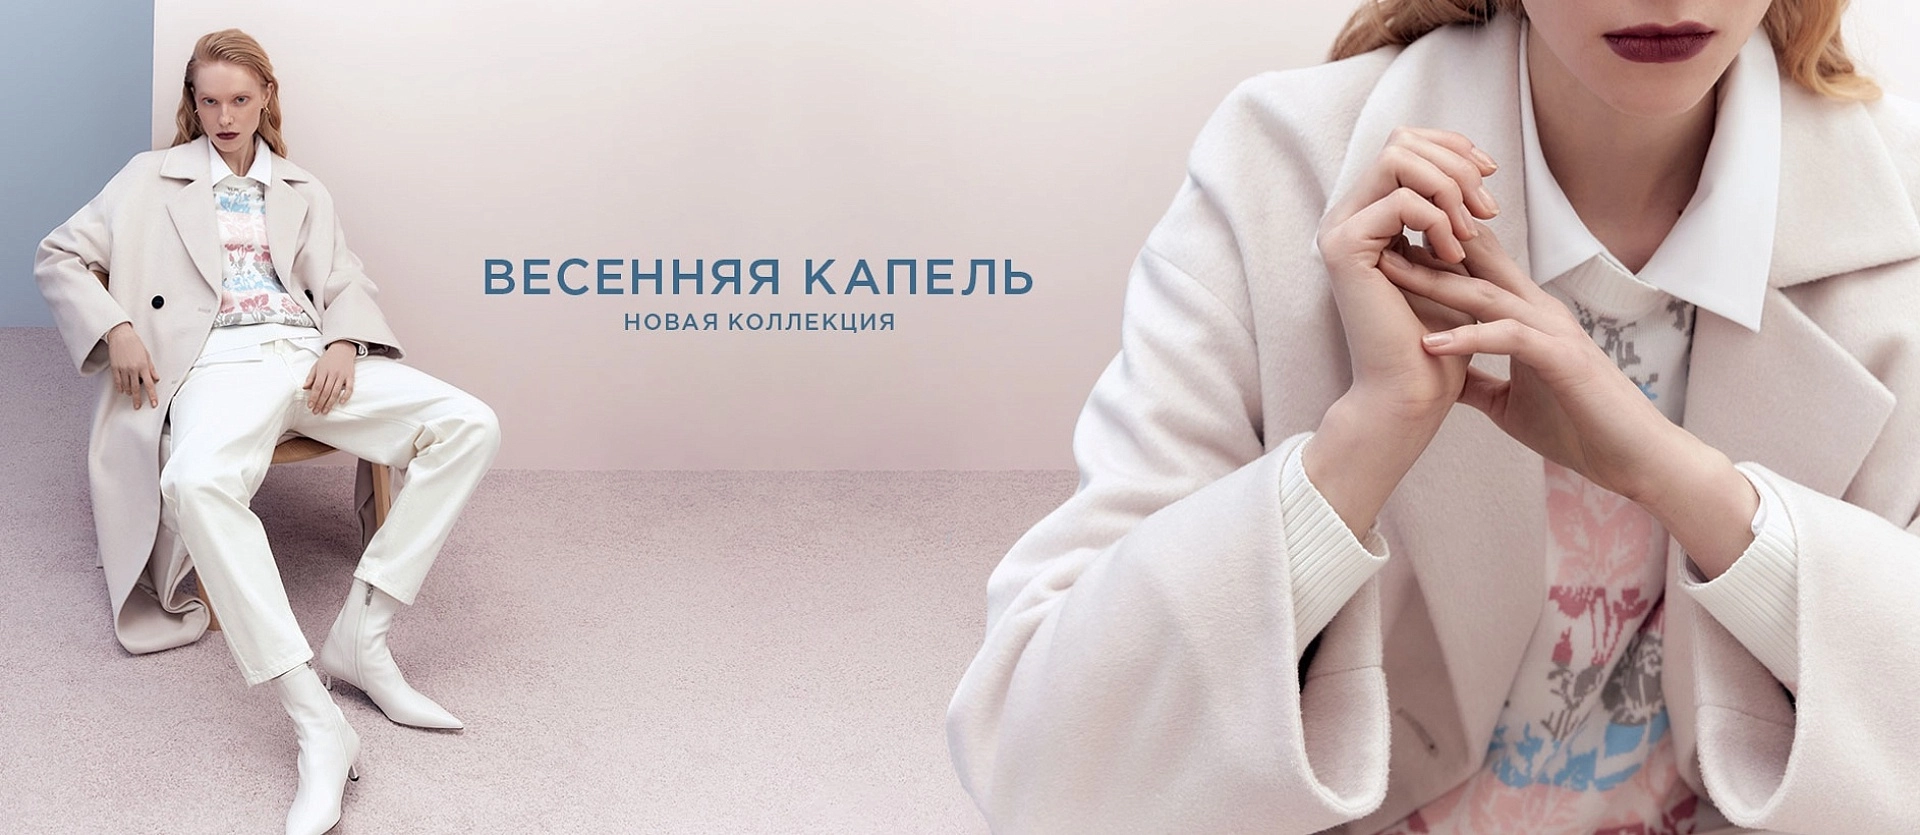 prachka-mira.ru - Online fashion store. Интернет магазин одежды и обуви, верхней одежды